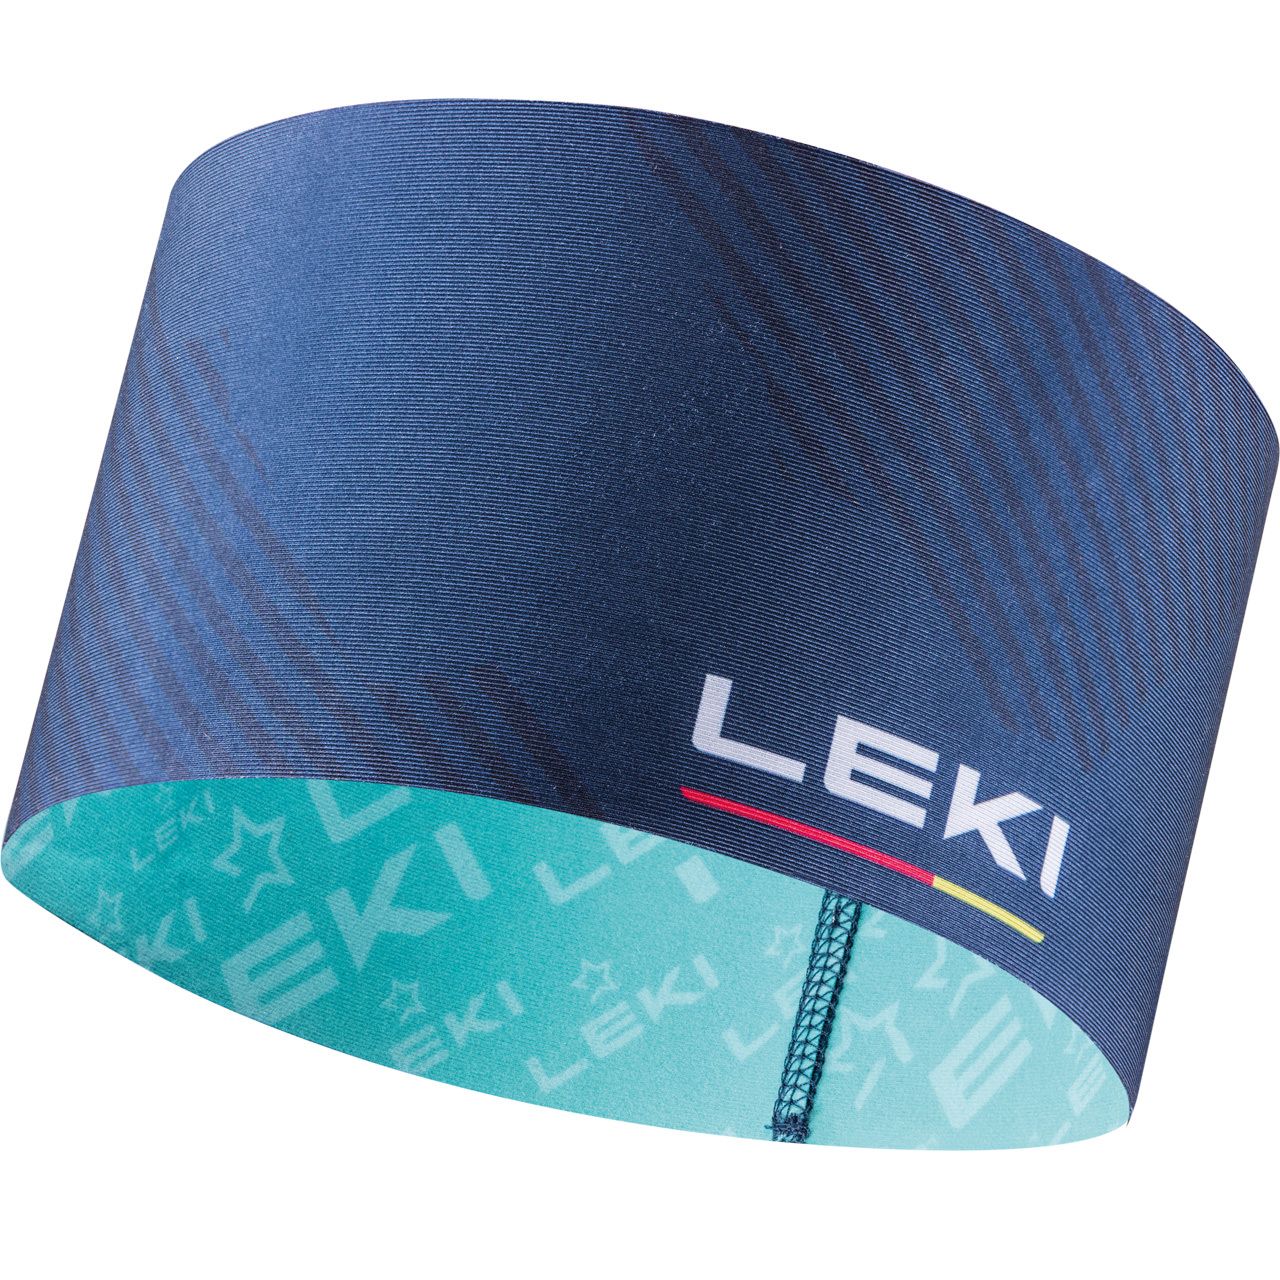 Leki Stirnband XC blue/mint von Leki